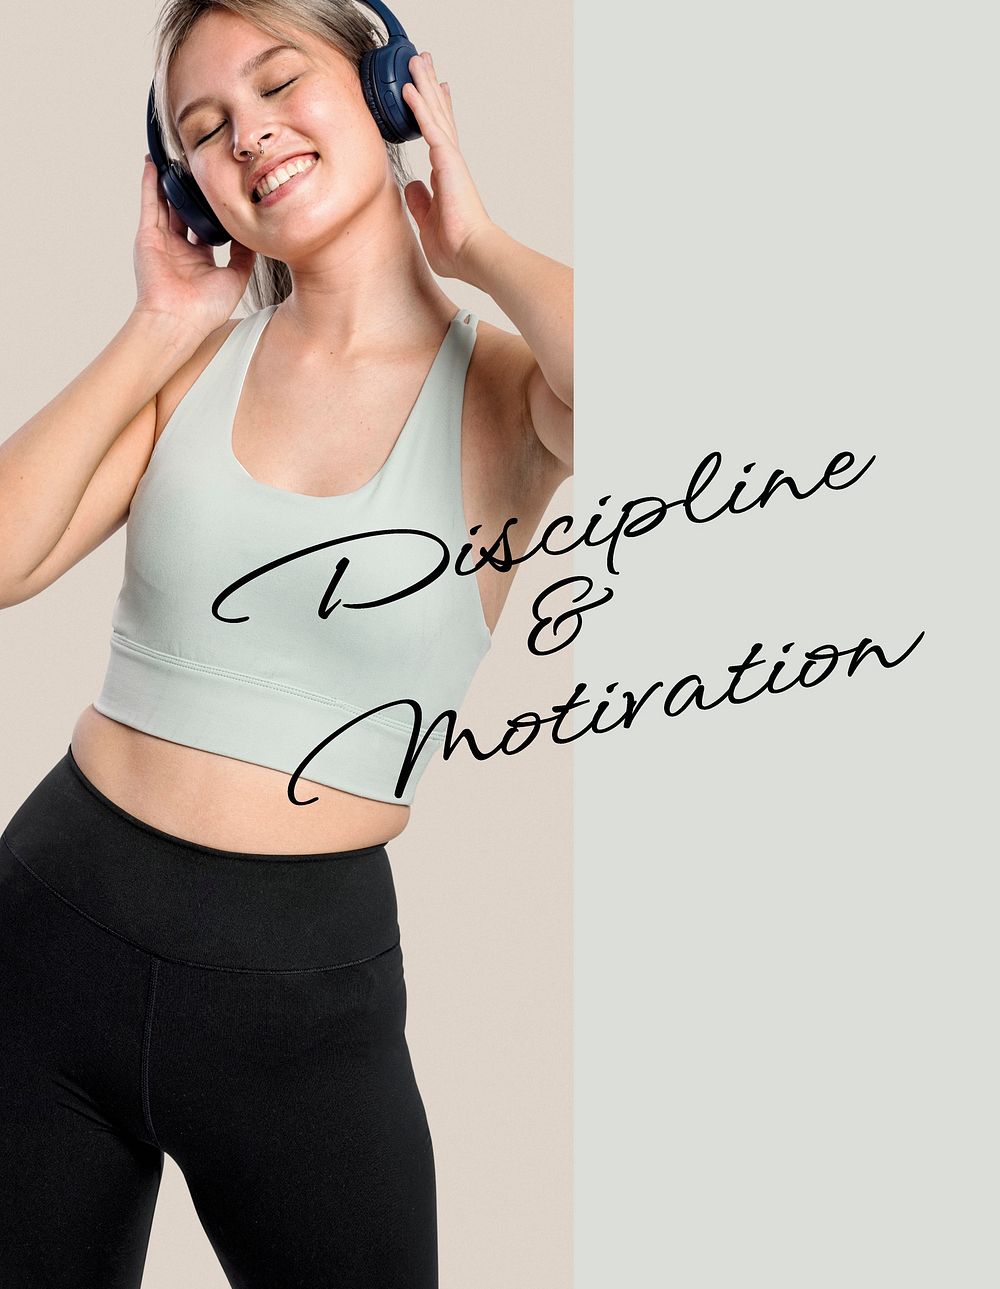 Discipline & motivation flyer template, sports, wellness photo vector